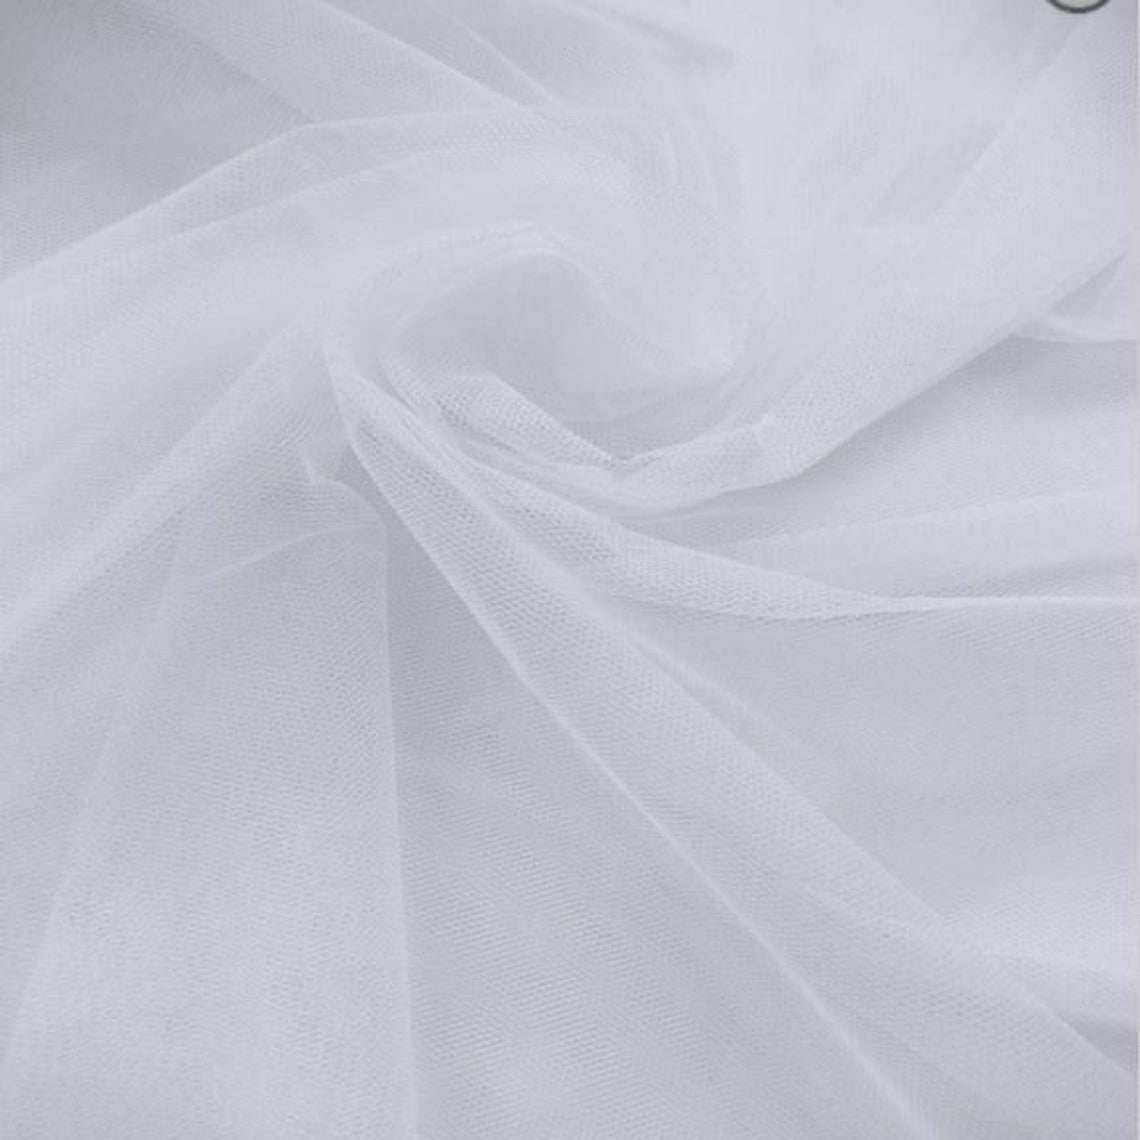 Illusion Tulle/Net Bridal Veil Mesh Fabric 108